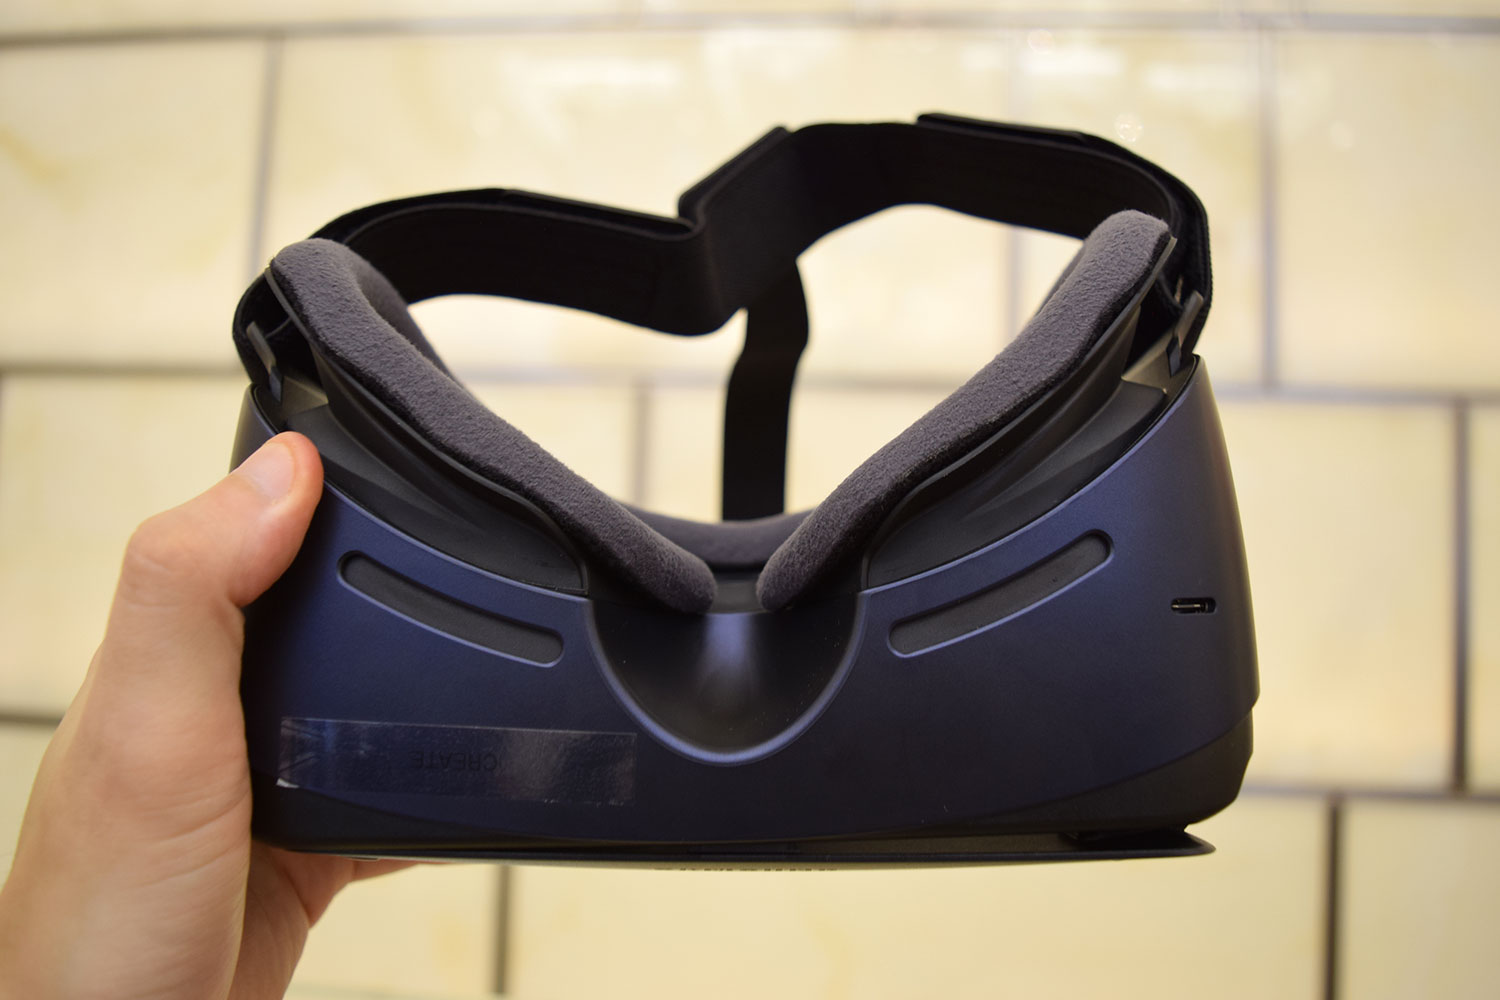 Samsung Gear VR 2